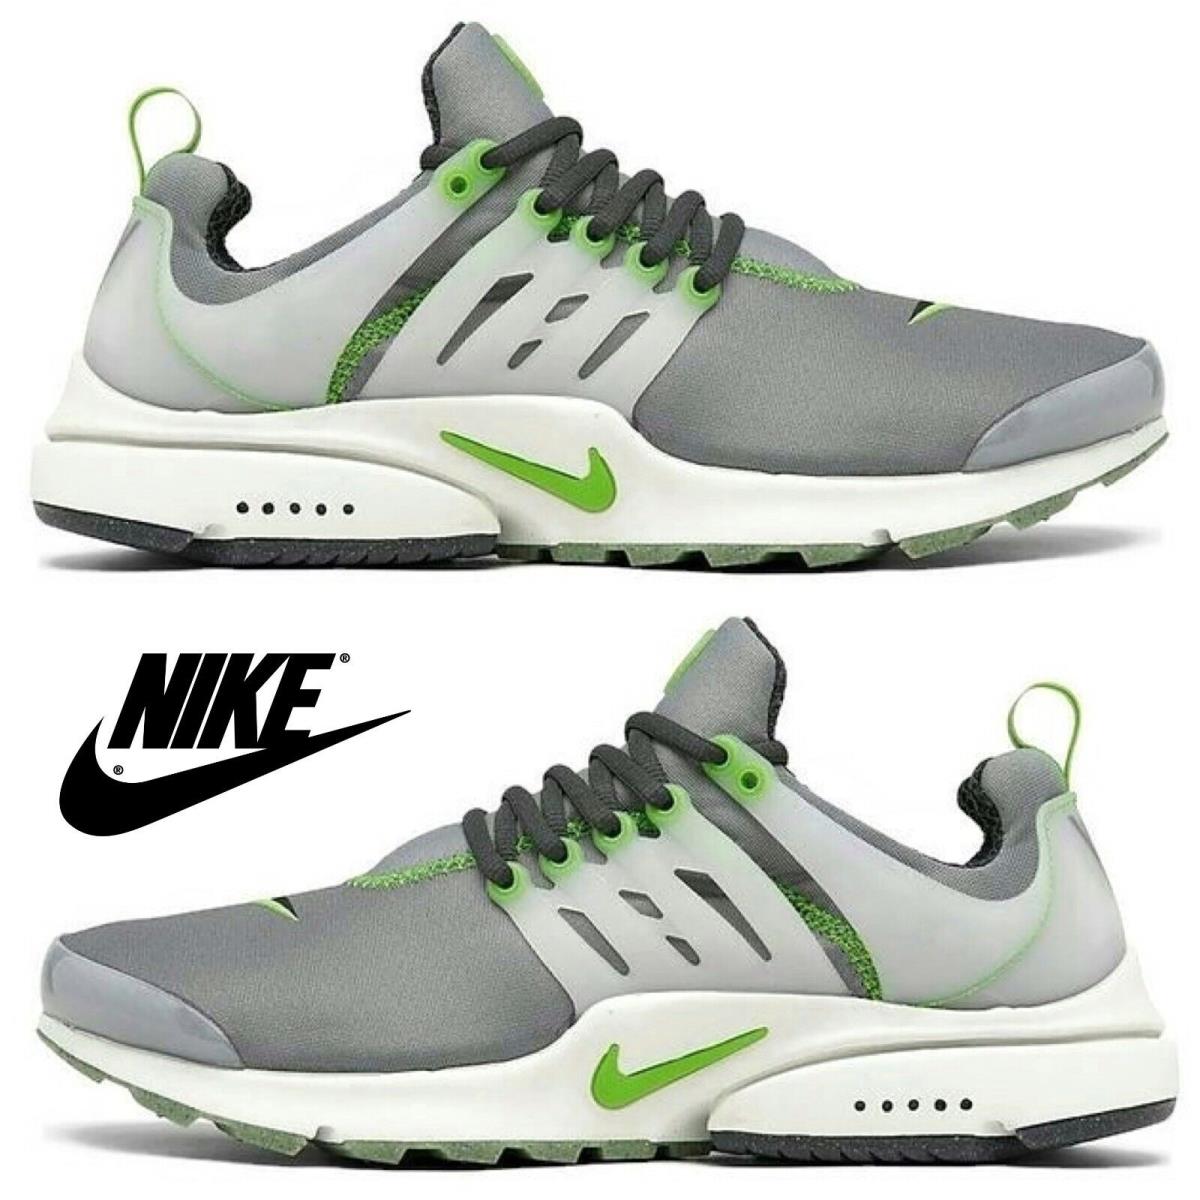 Nike Air Presto Running Sneakers Men`s Comfort Casual Shoes Sport Gray Green - Gray , Smoke Grey/Scream Green/Phantom Manufacturer